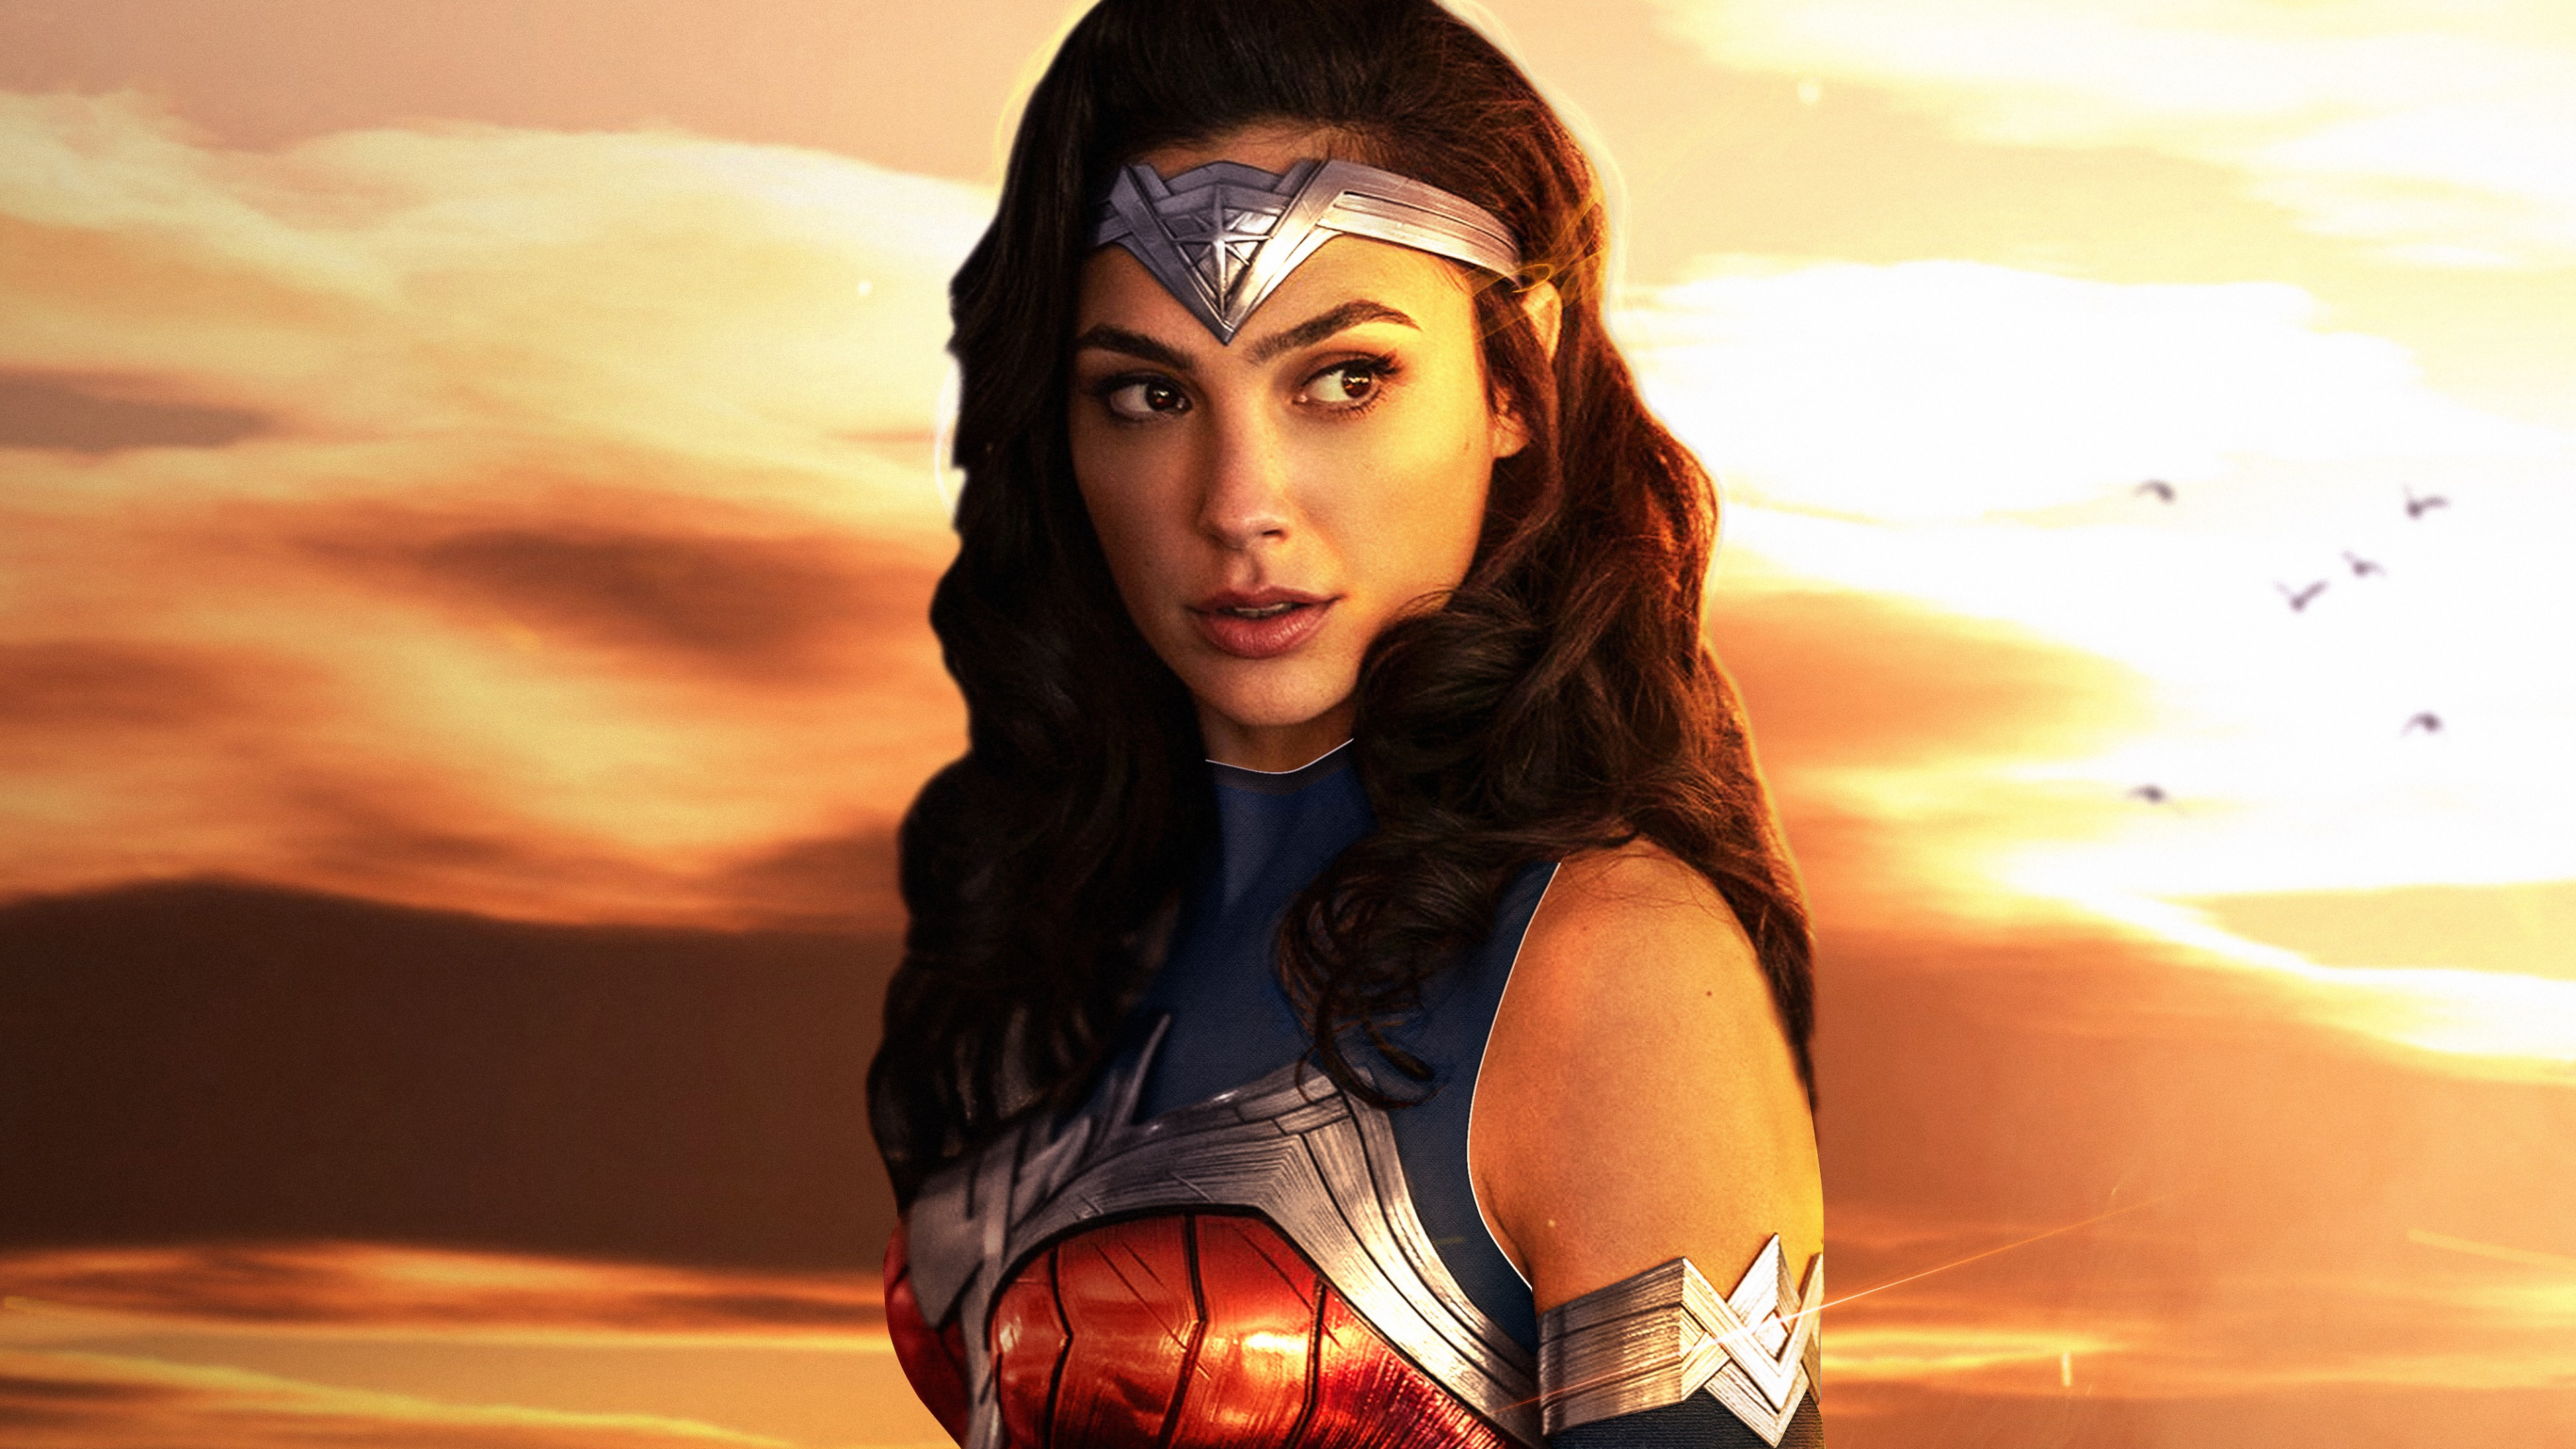 Download movie Wonder Woman Gal Gadot art wallpaper